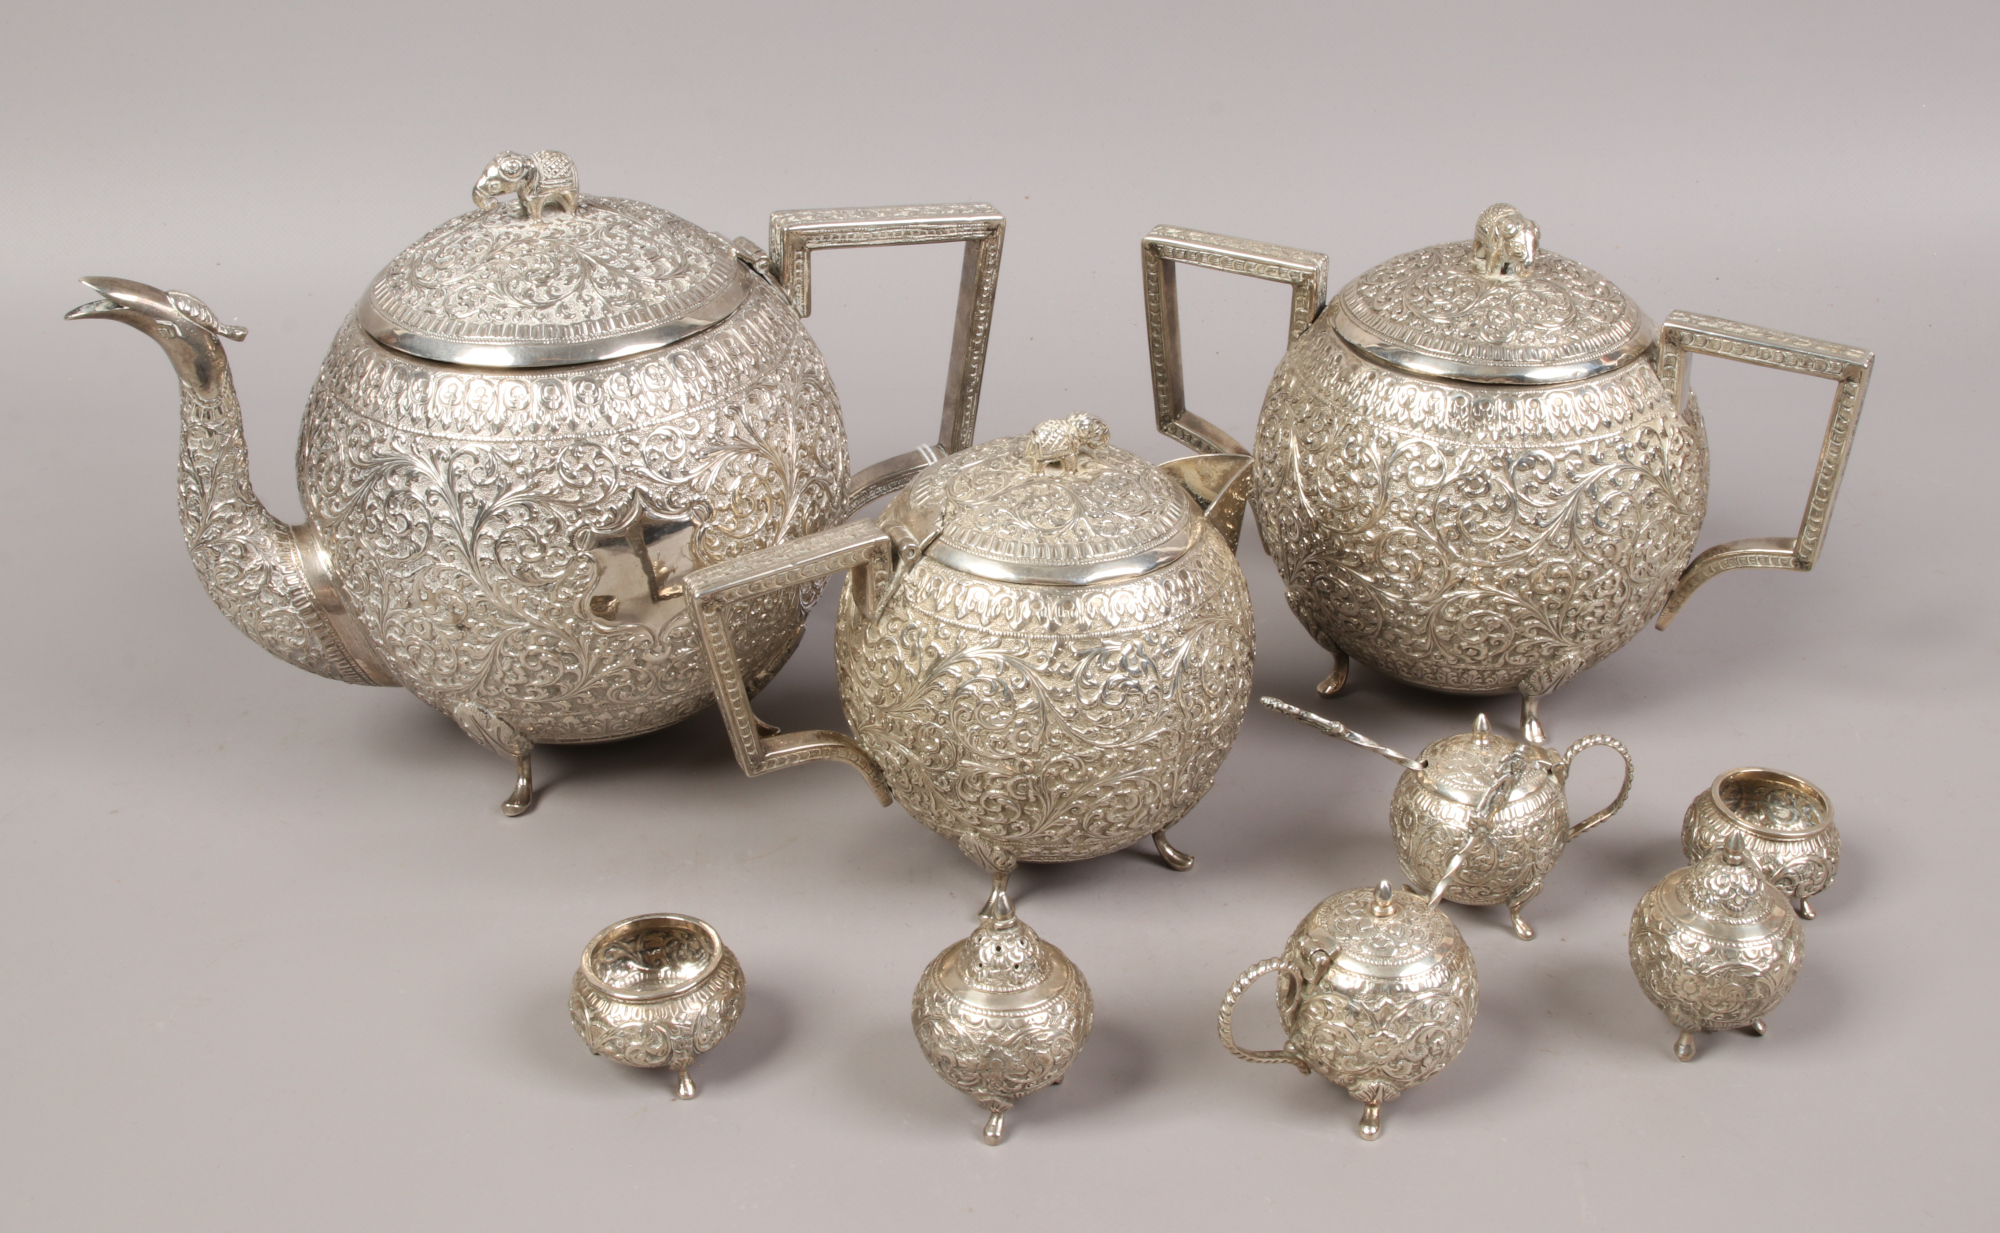 An Indian silver tea service of spherical form, comprising teapot, sugar bowl, hot water jug, cruets